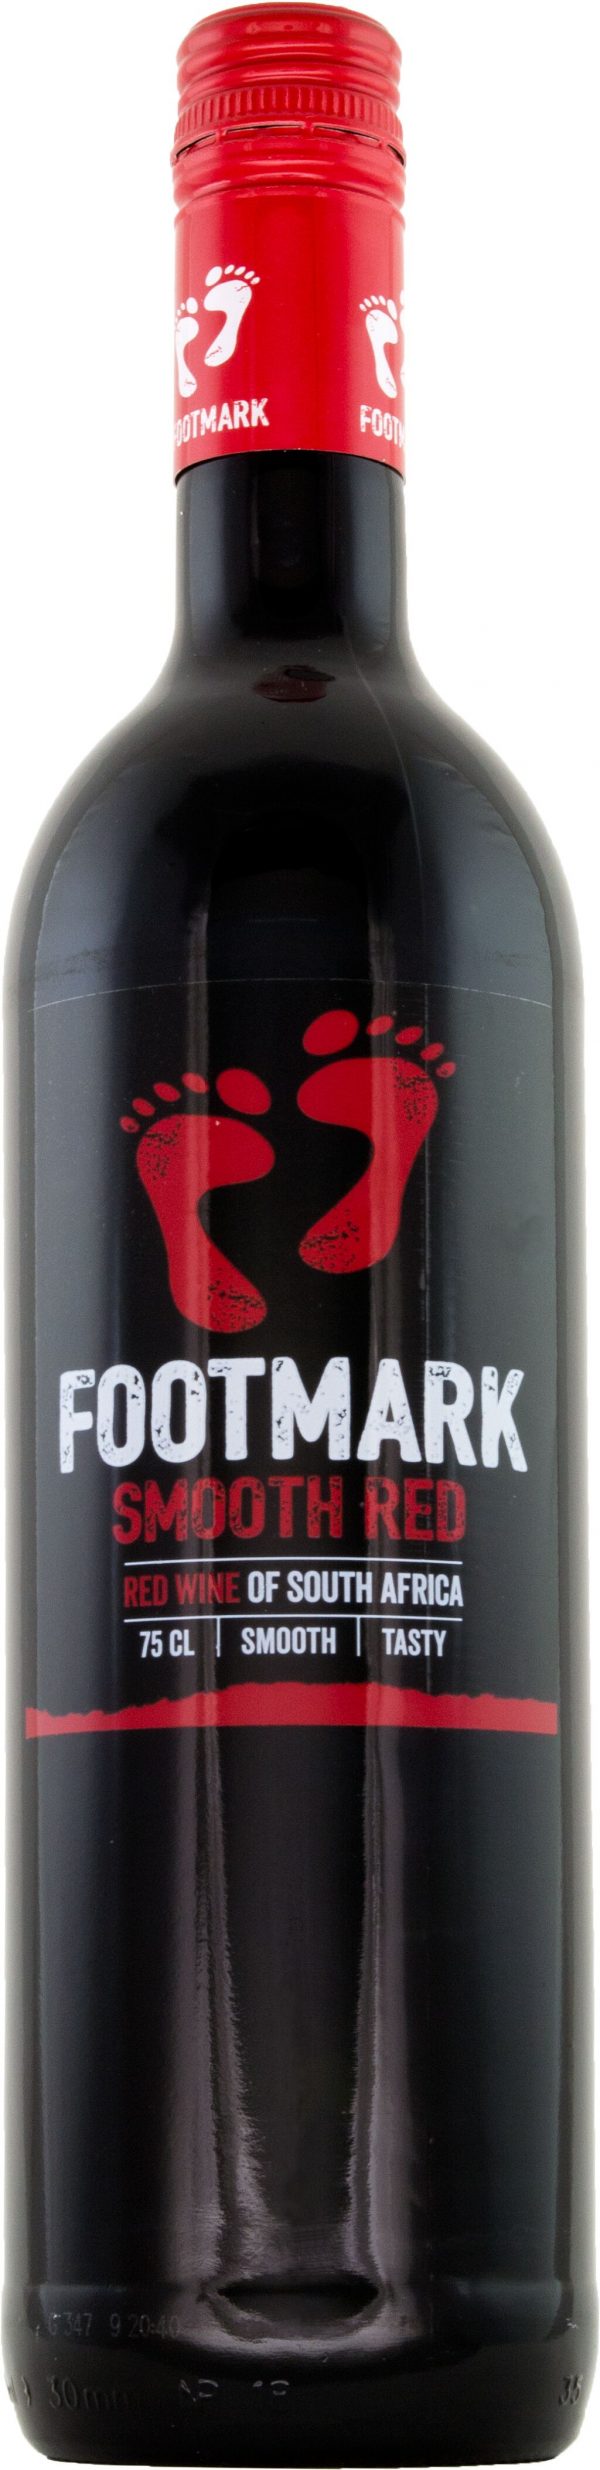 Footmark Smooth Red